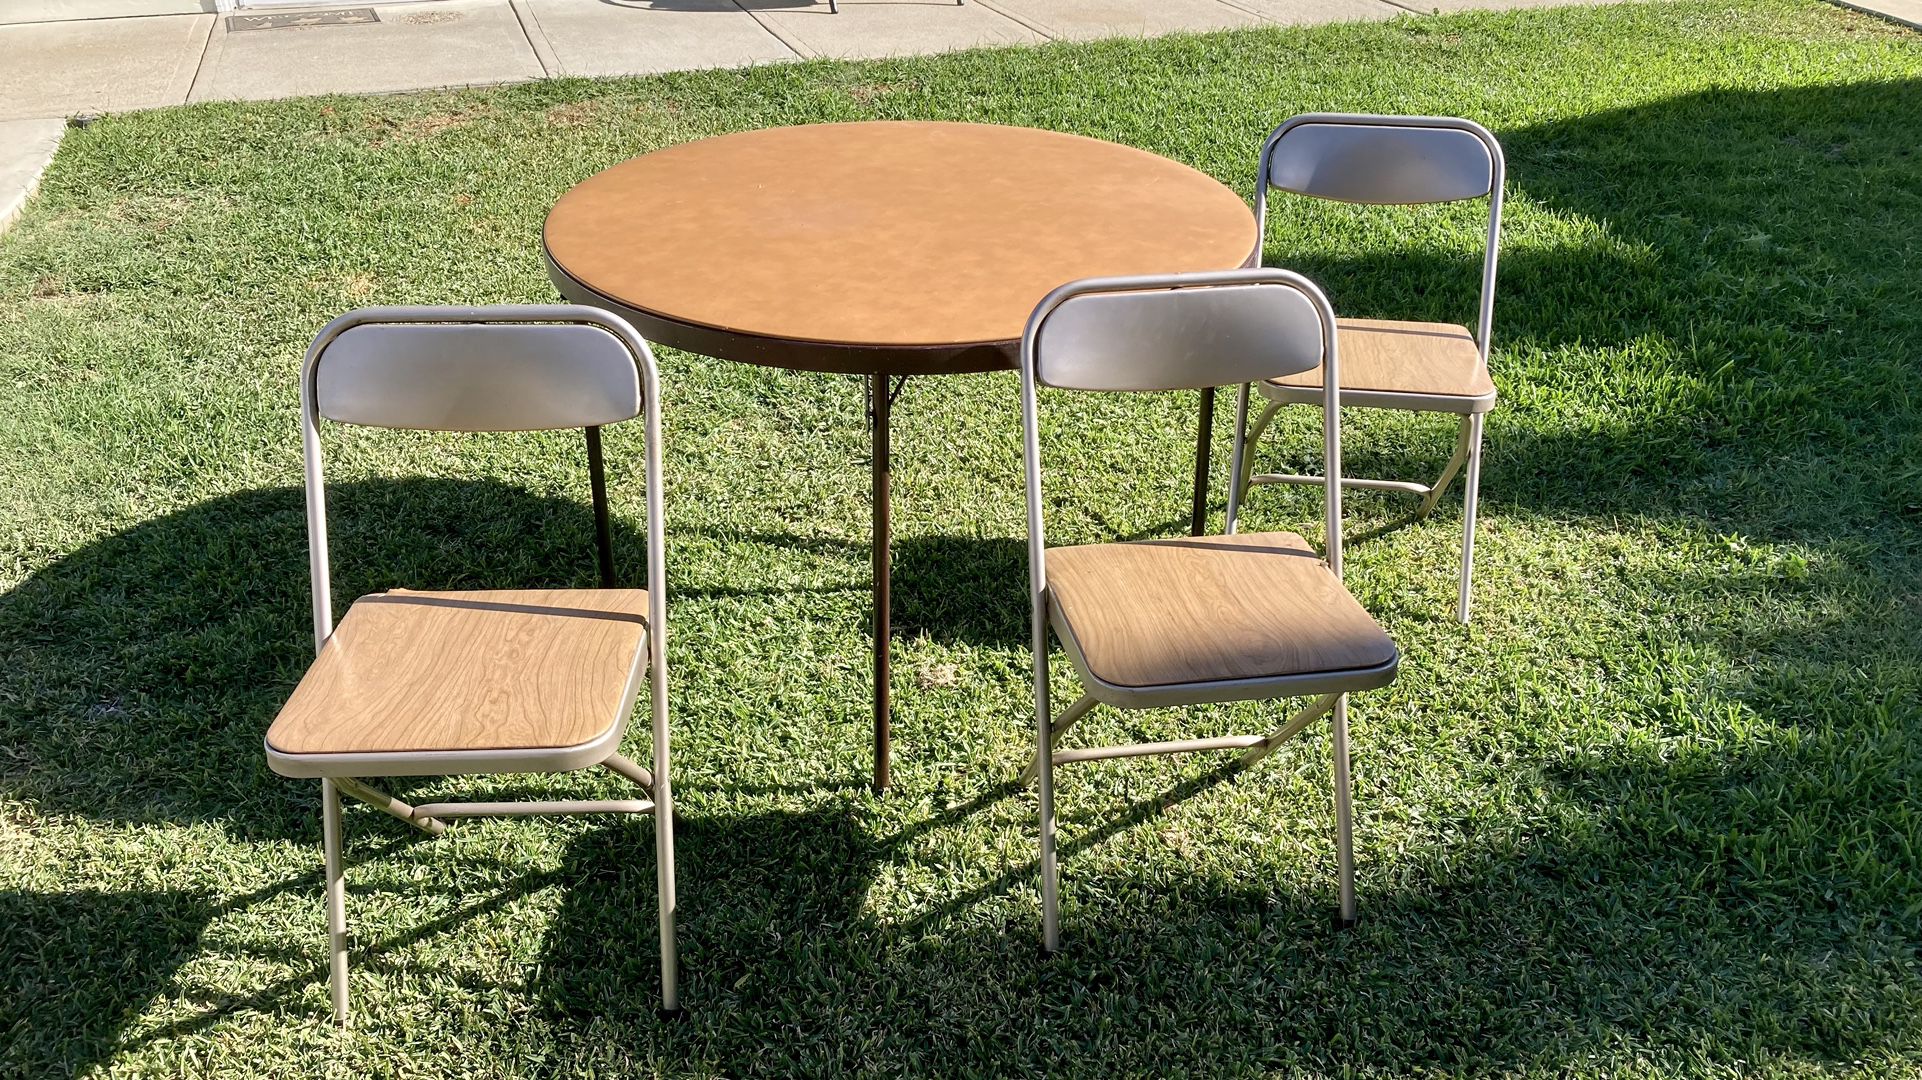 Samsonite Folding Metal Round Card Table- Has Padded Top & 3 Metal Chairs- **RARE**Vintage**